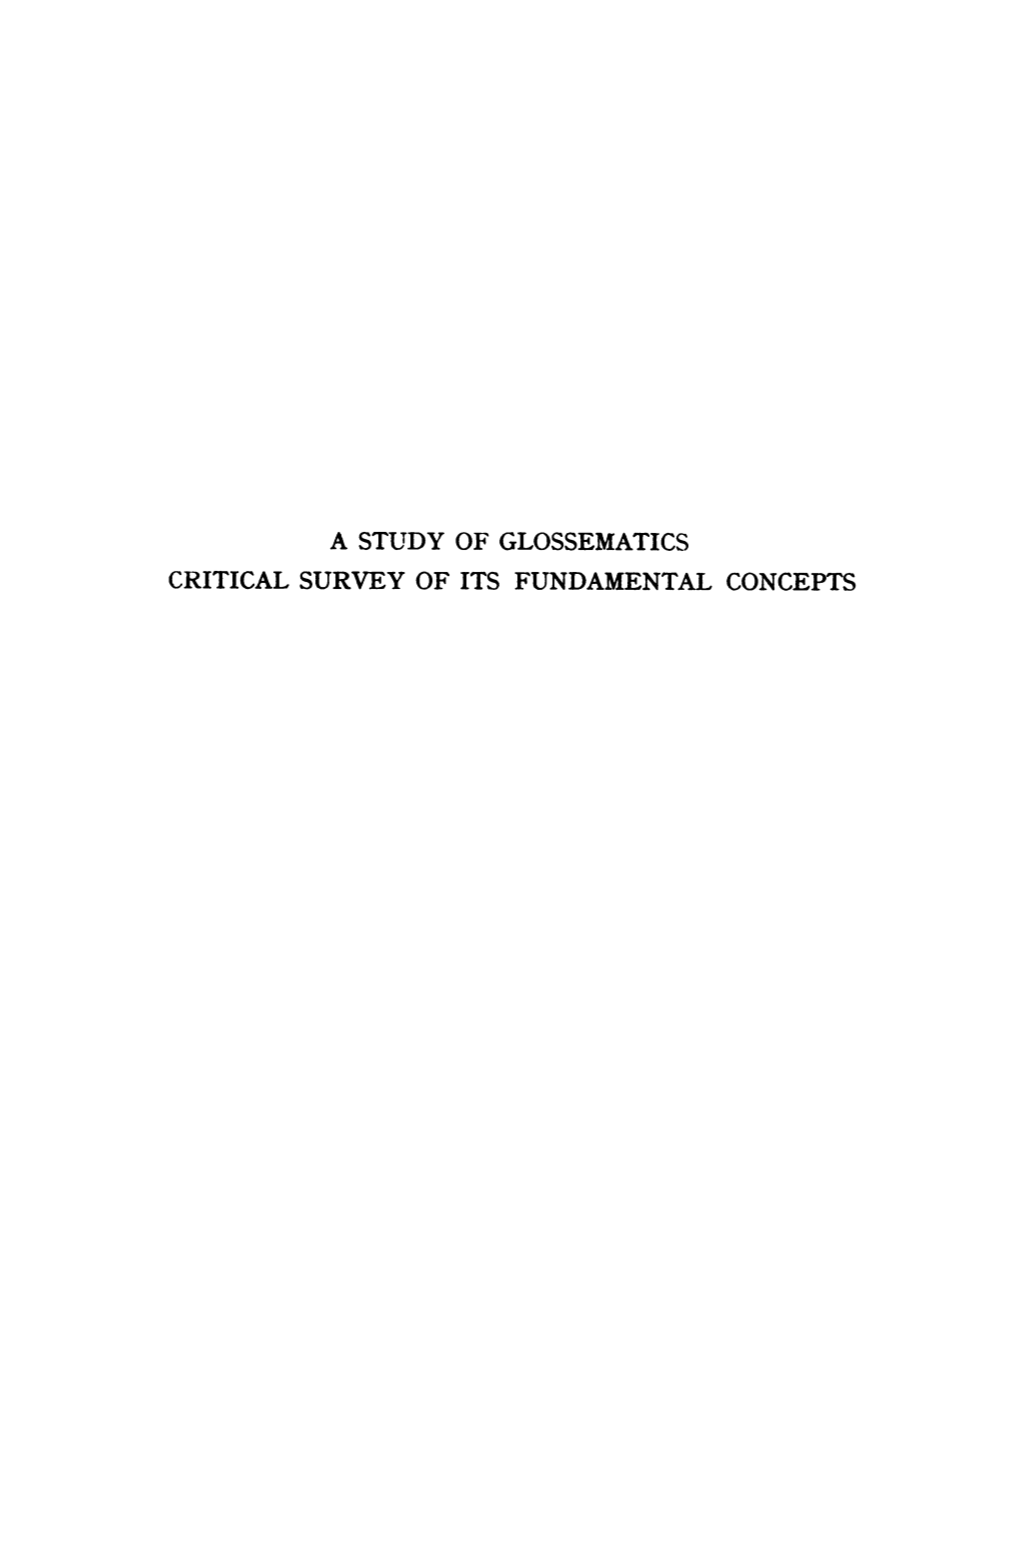 A Study of Glossematics Critical Survey of Its Fundamental Concepts a Study of Glossema Tics Critical Survey of Its Fundamental Concepts